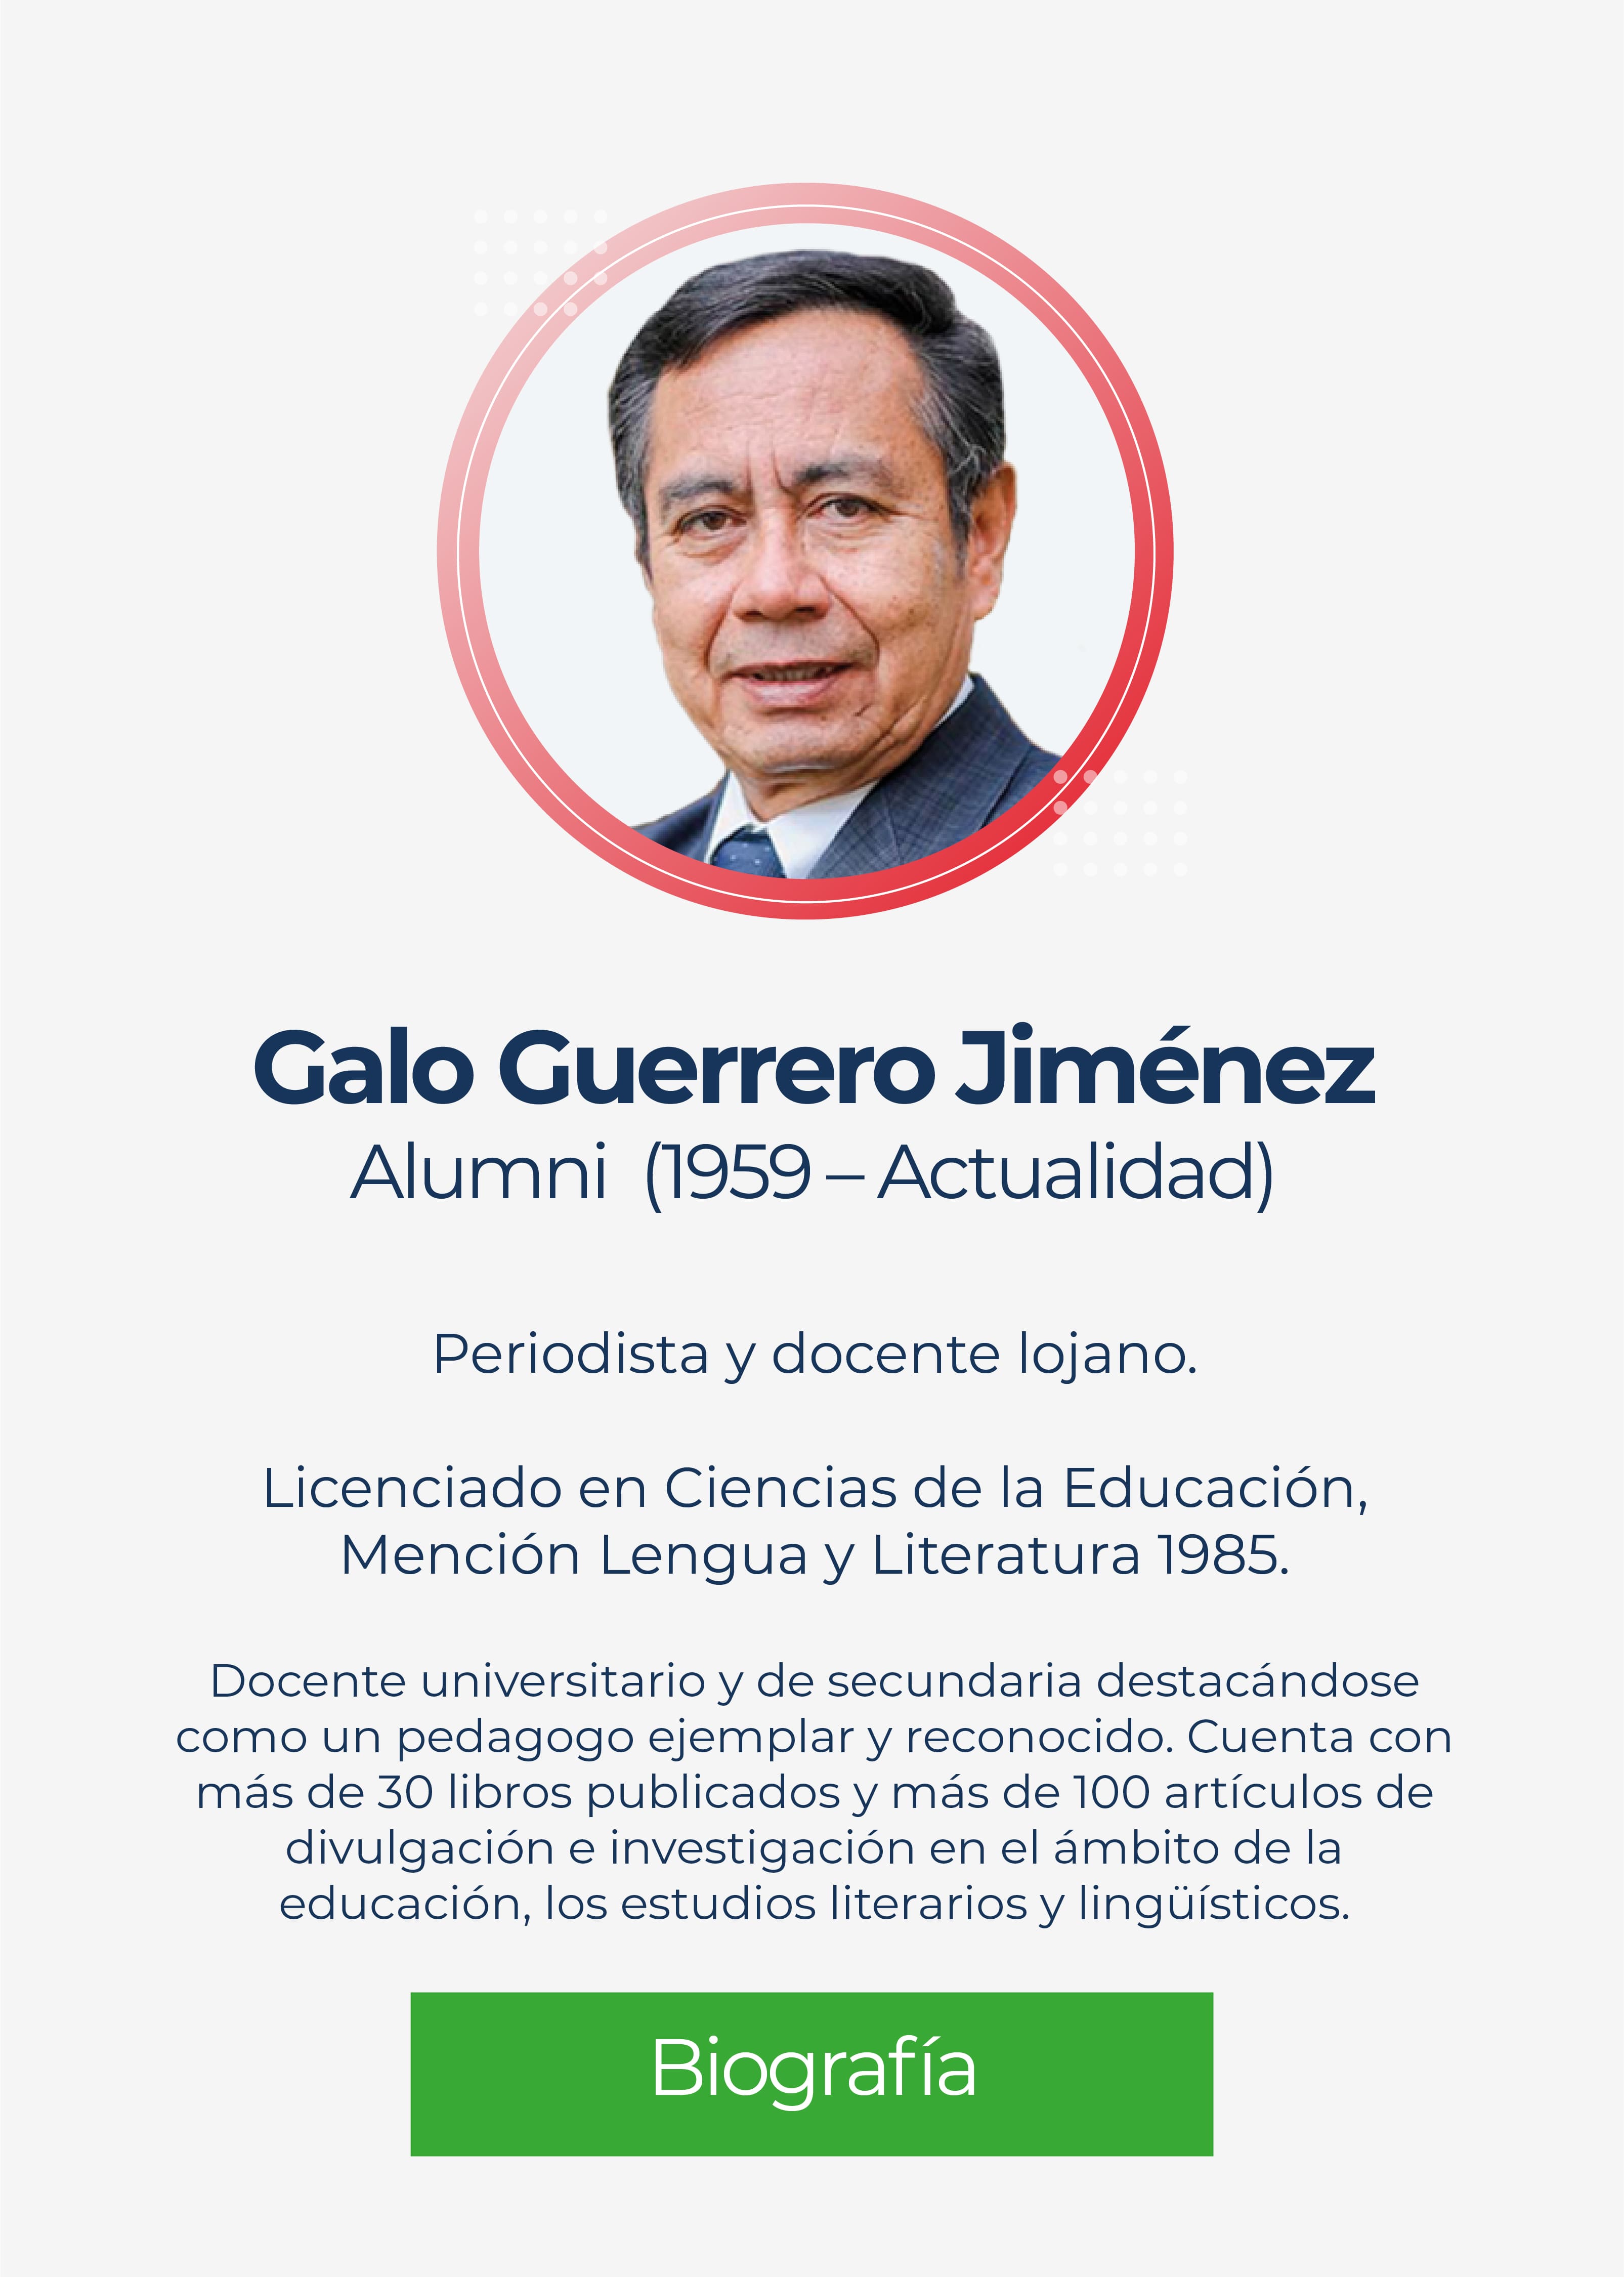 Galo Rodrigo Guerrero Jiménez